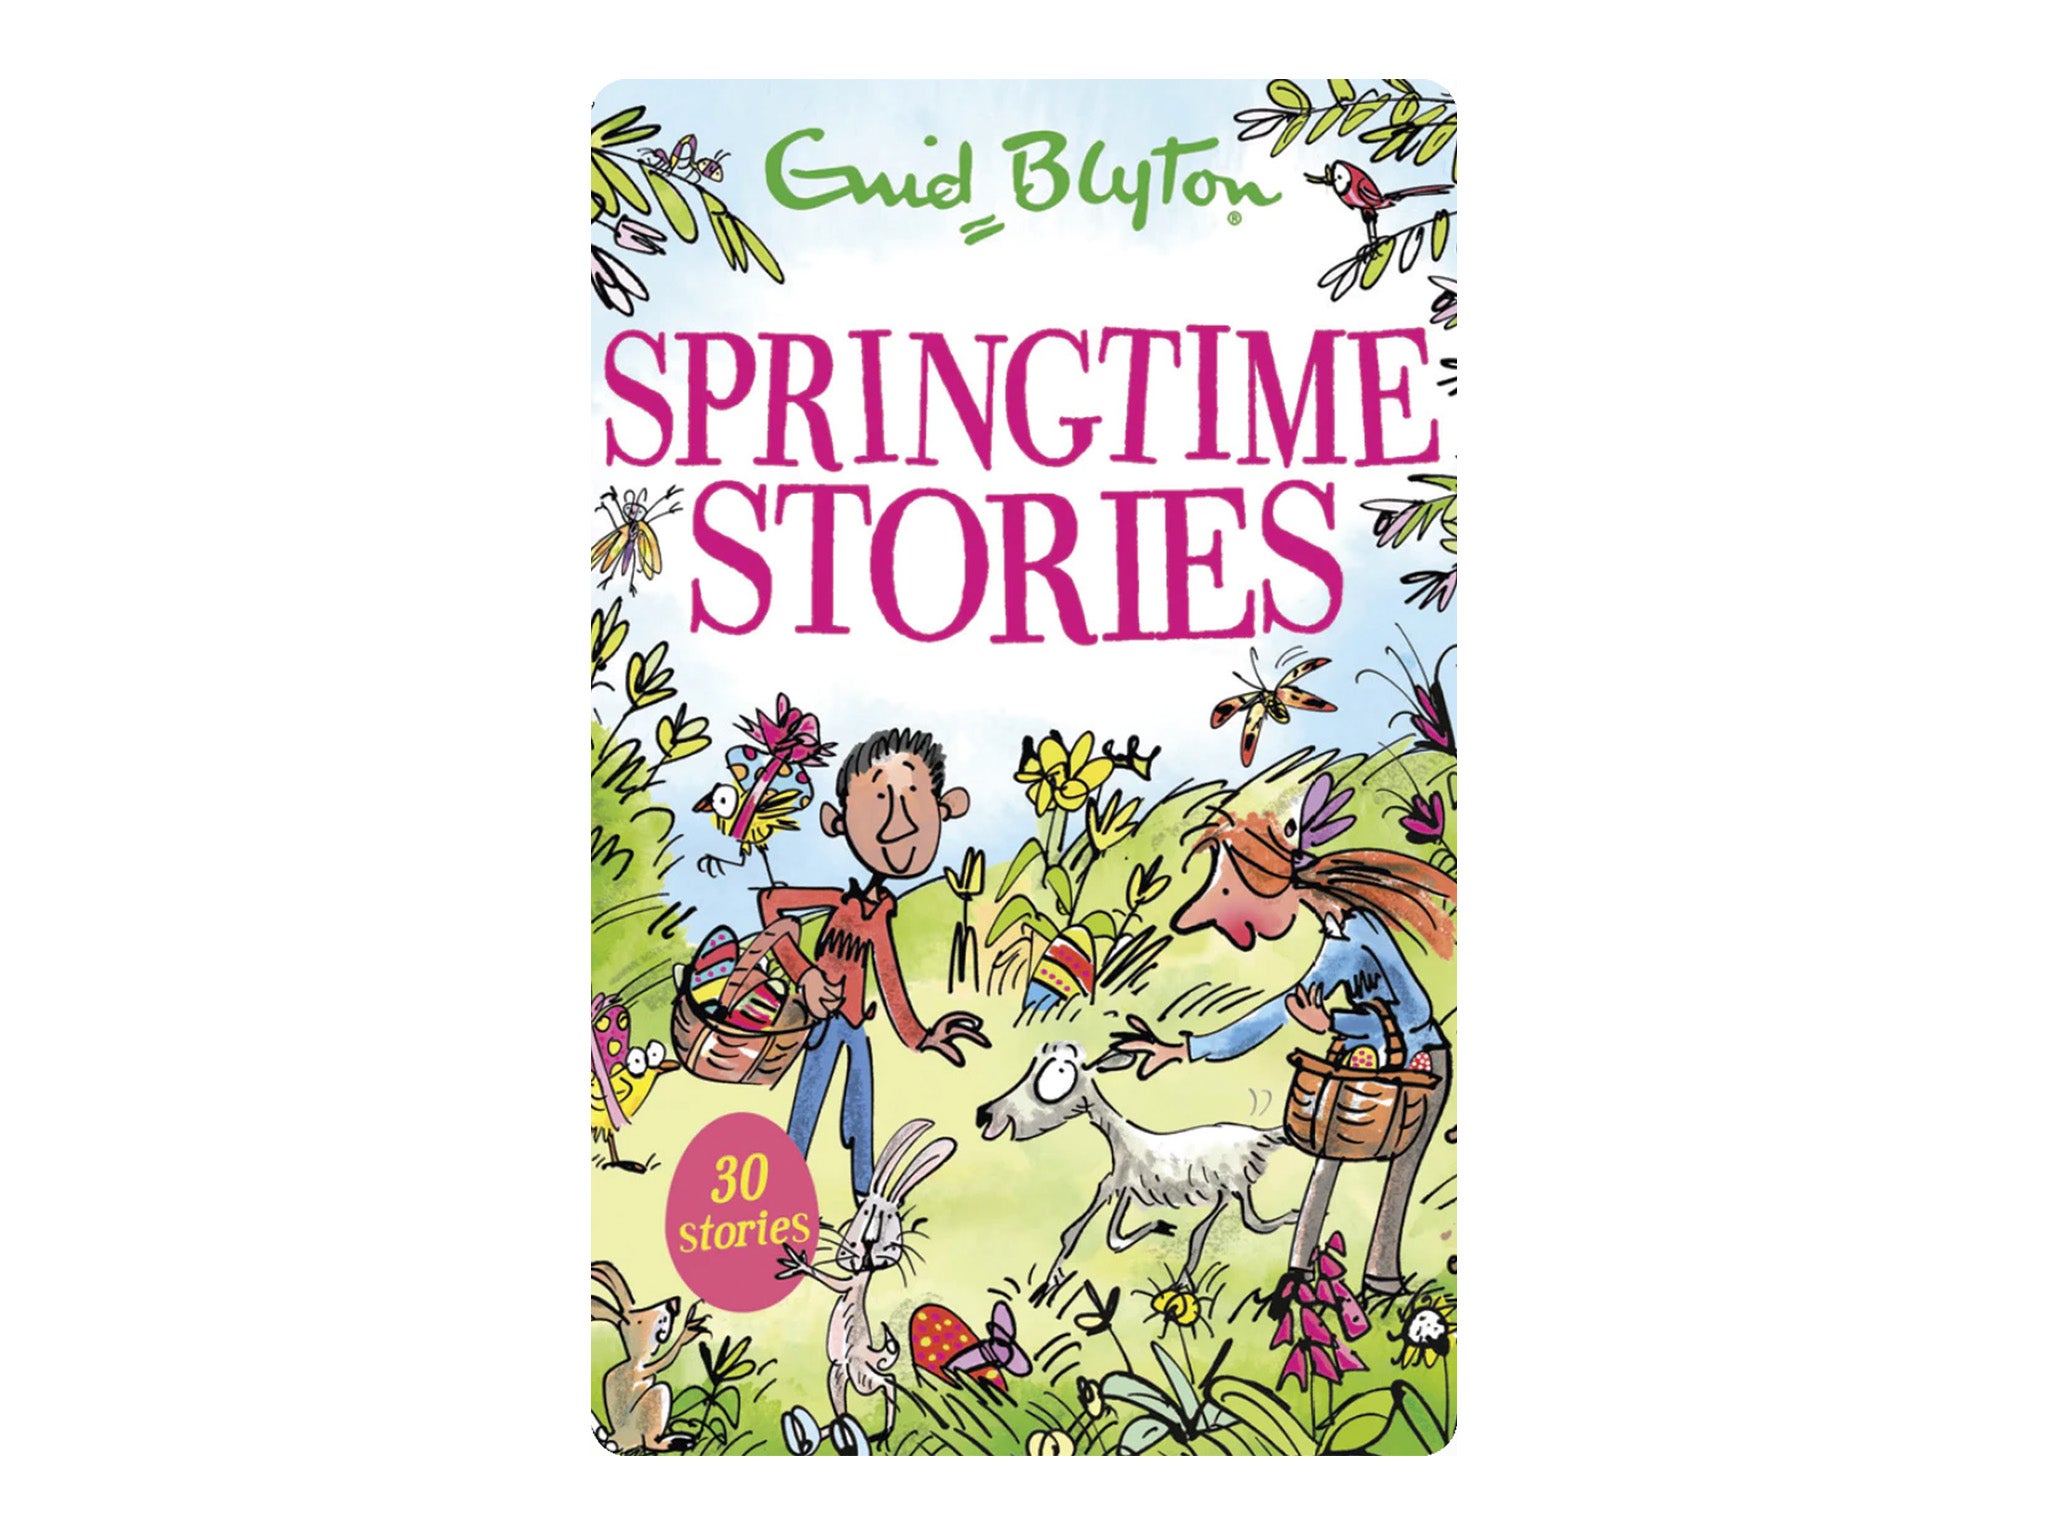 Yoto Springtime Stories by Enid Blyton audiobook